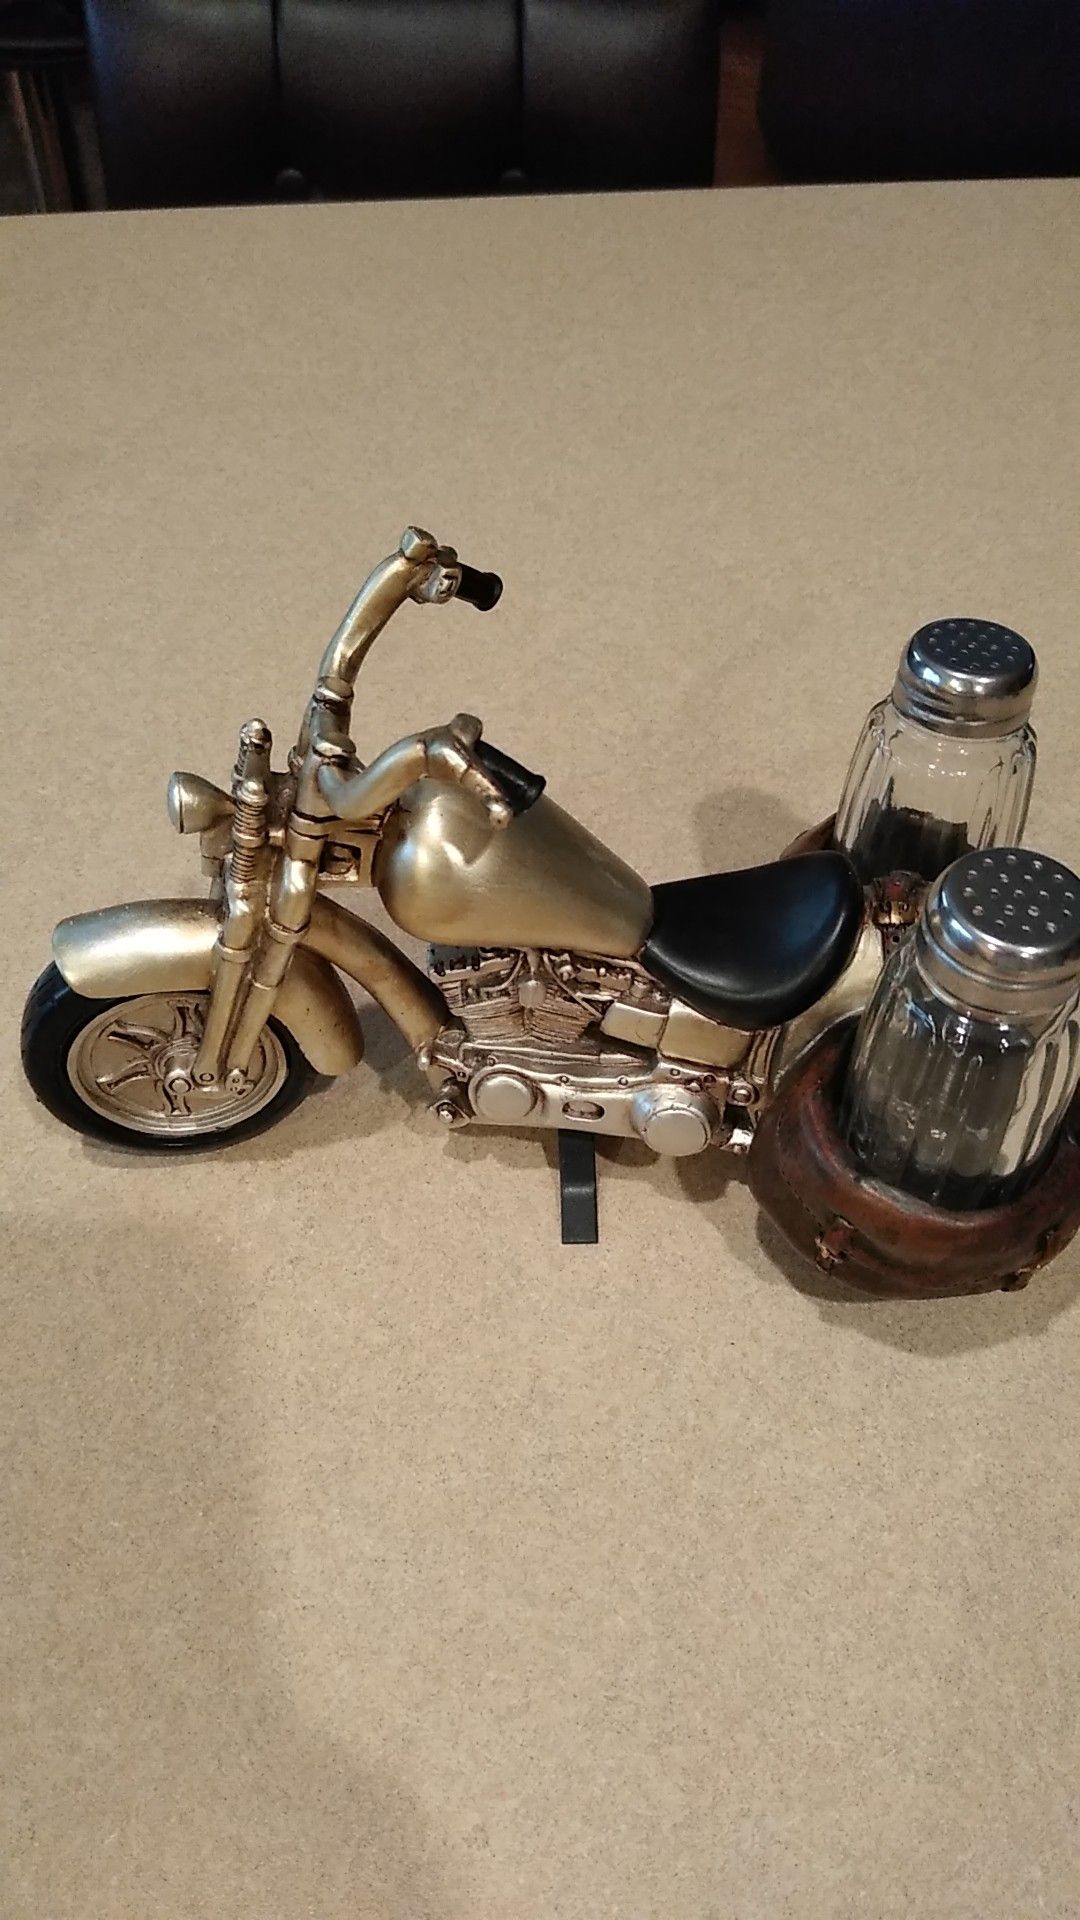 Motorcycle salt and pepper shaker holder